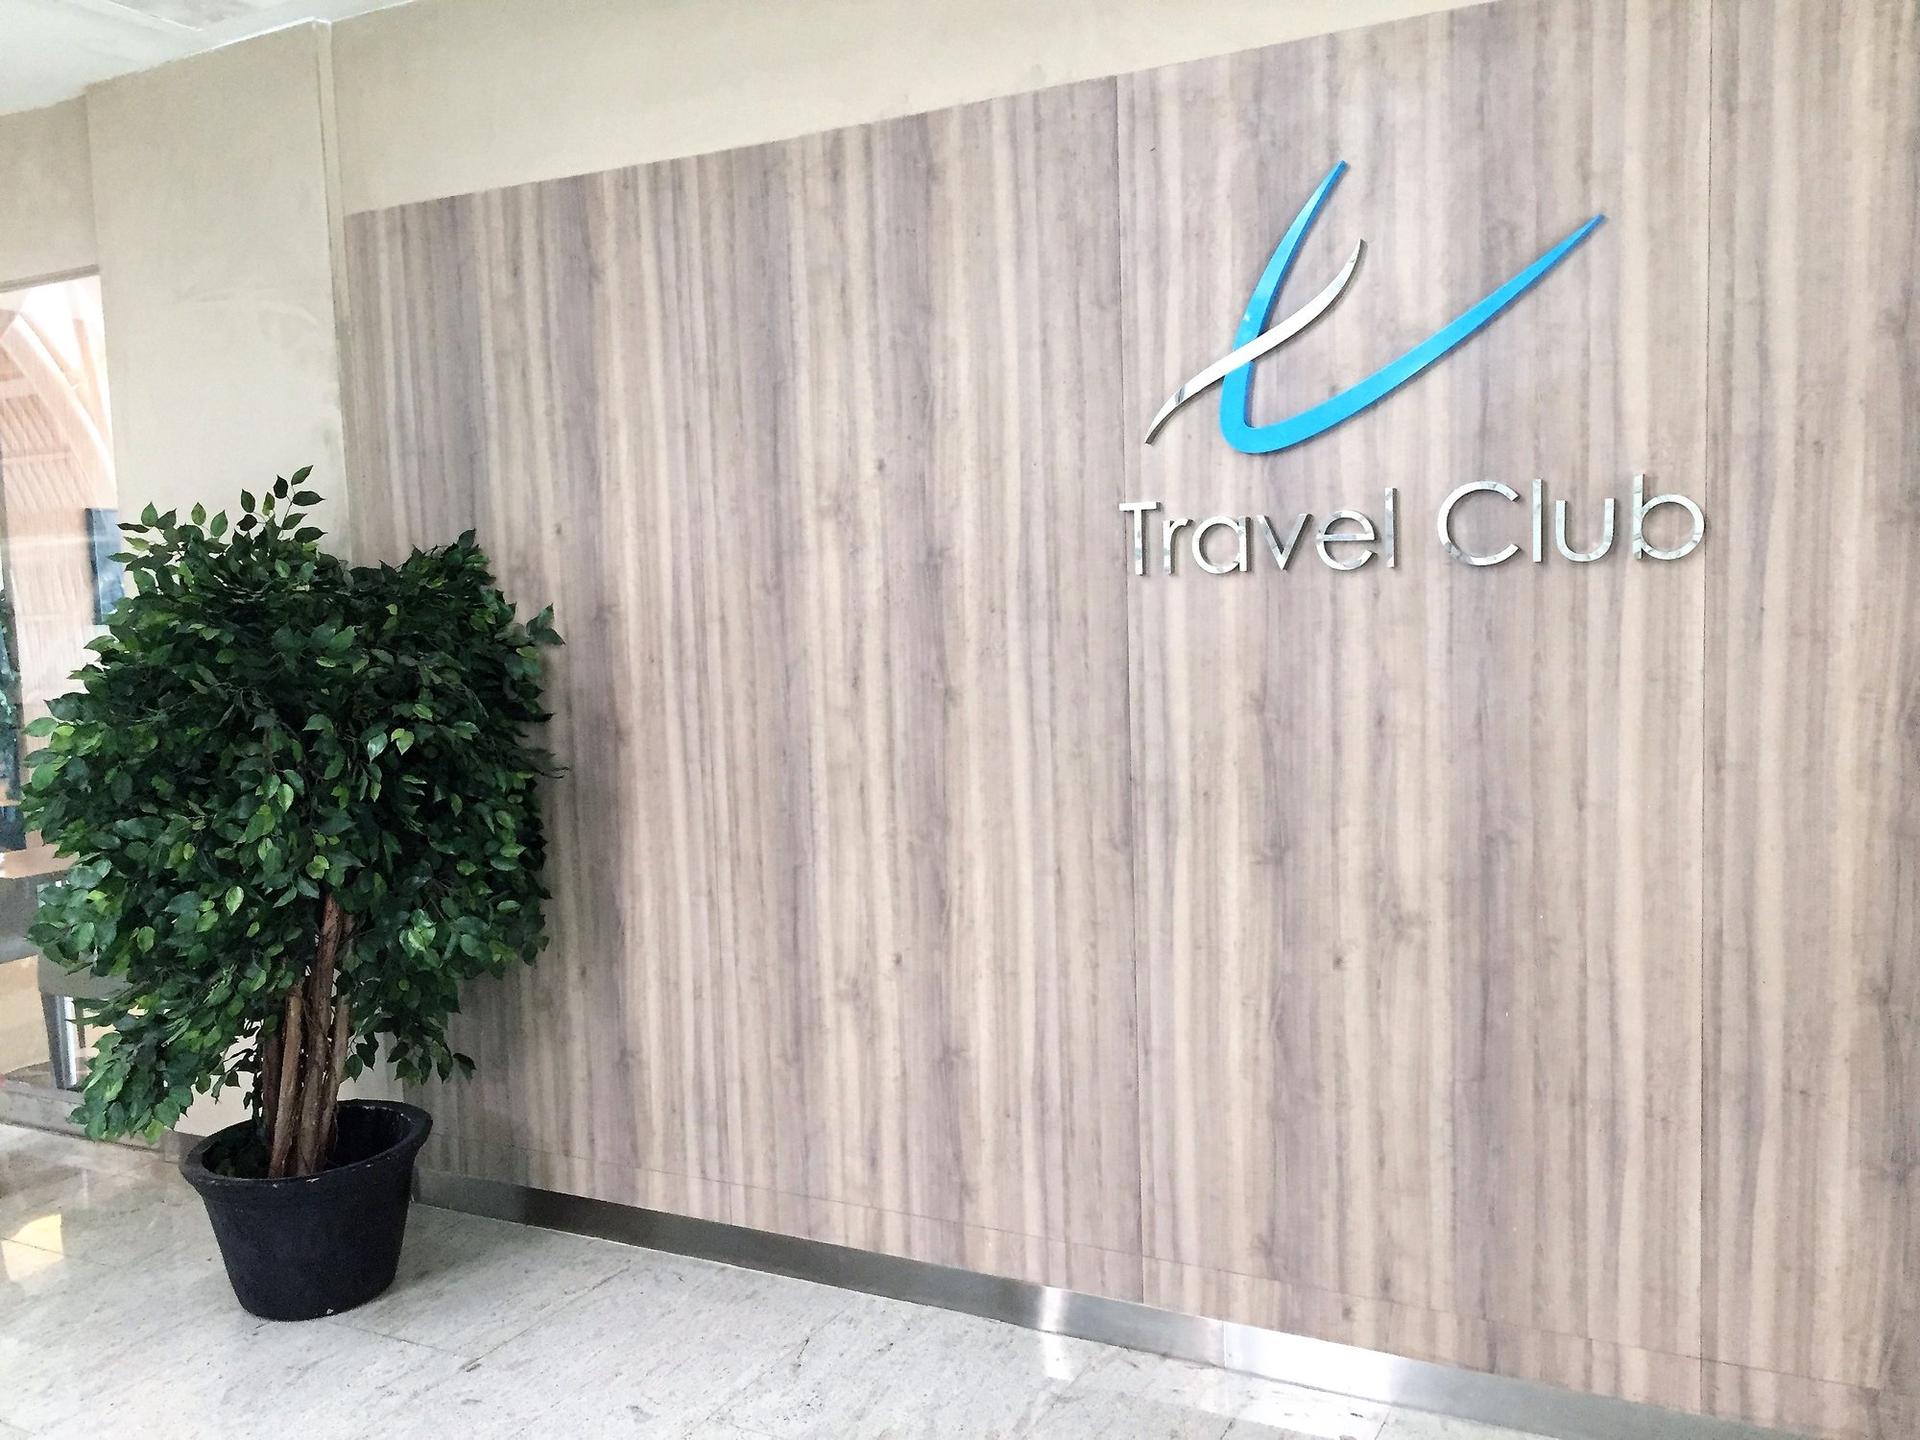 Travel Club Lounge image 10 of 12